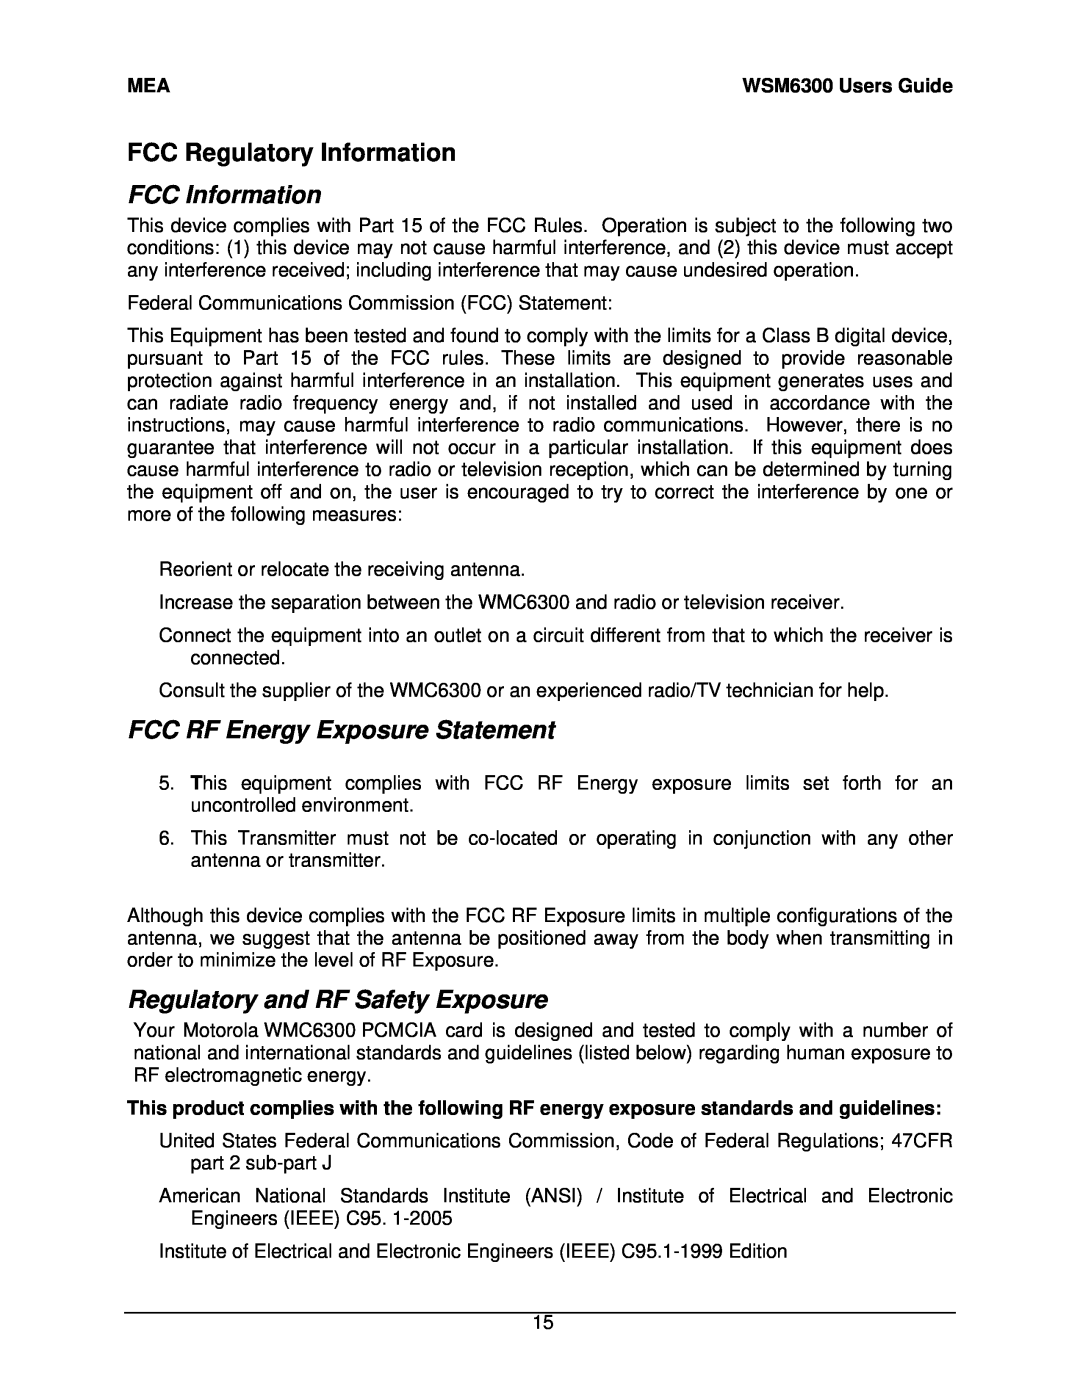 Motorola WSM6300 manual FCC Regulatory Information, FCC Information, FCC RF Energy Exposure Statement 